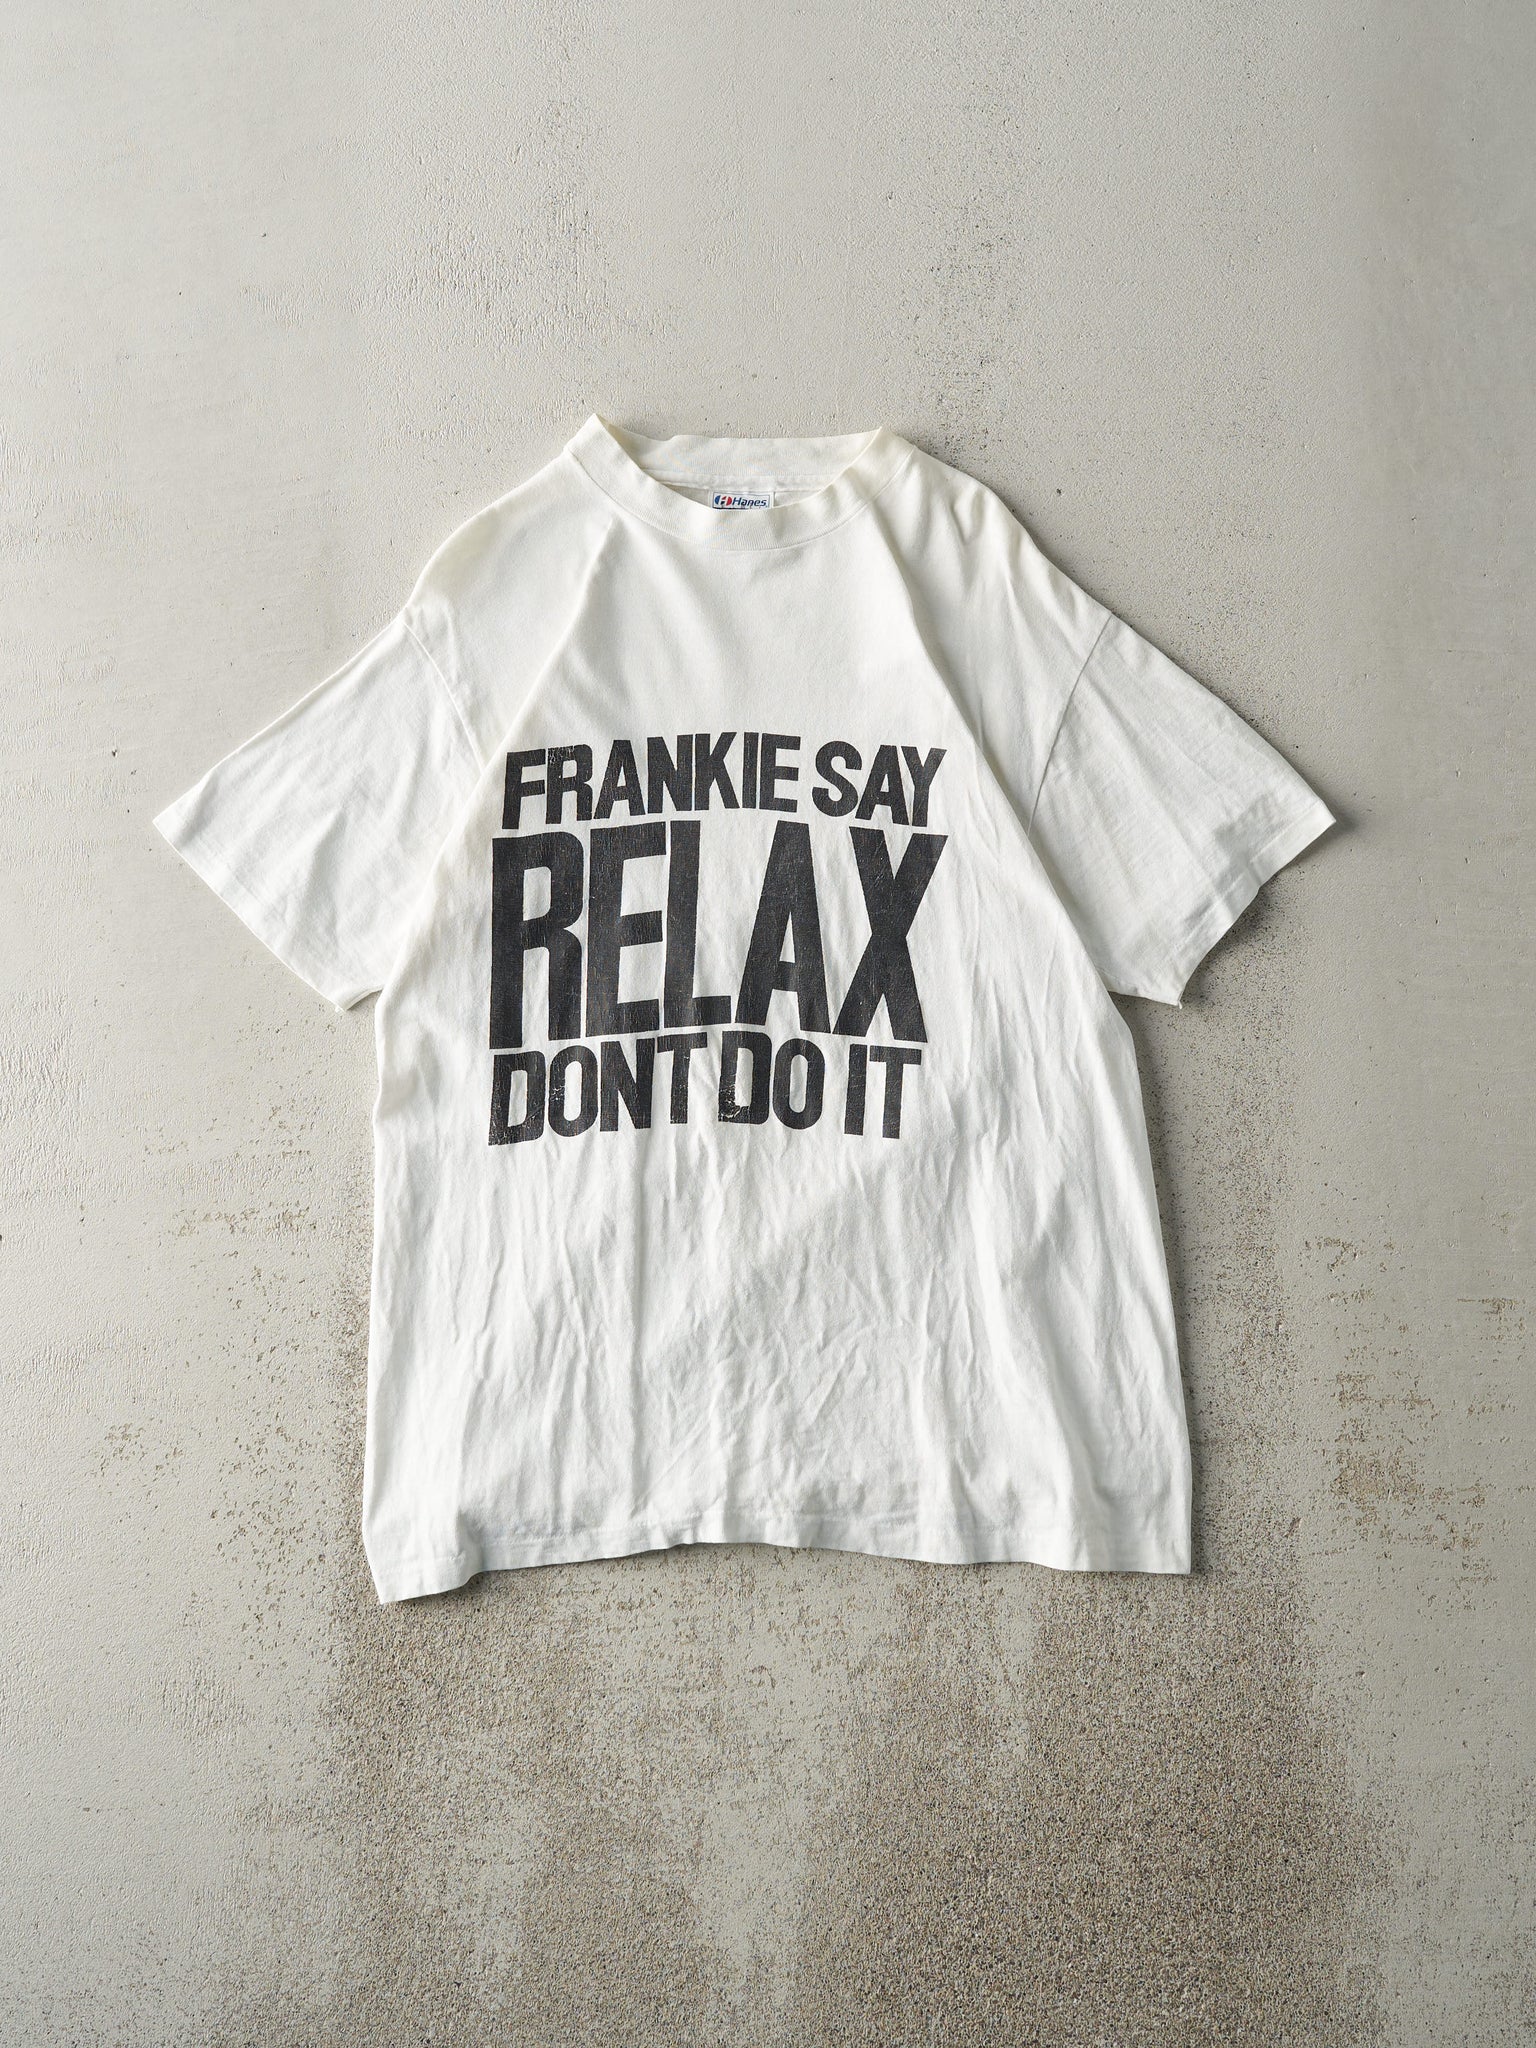 Vintage 90s White "Frankie Says Relax" Single Stitch Tee (M)